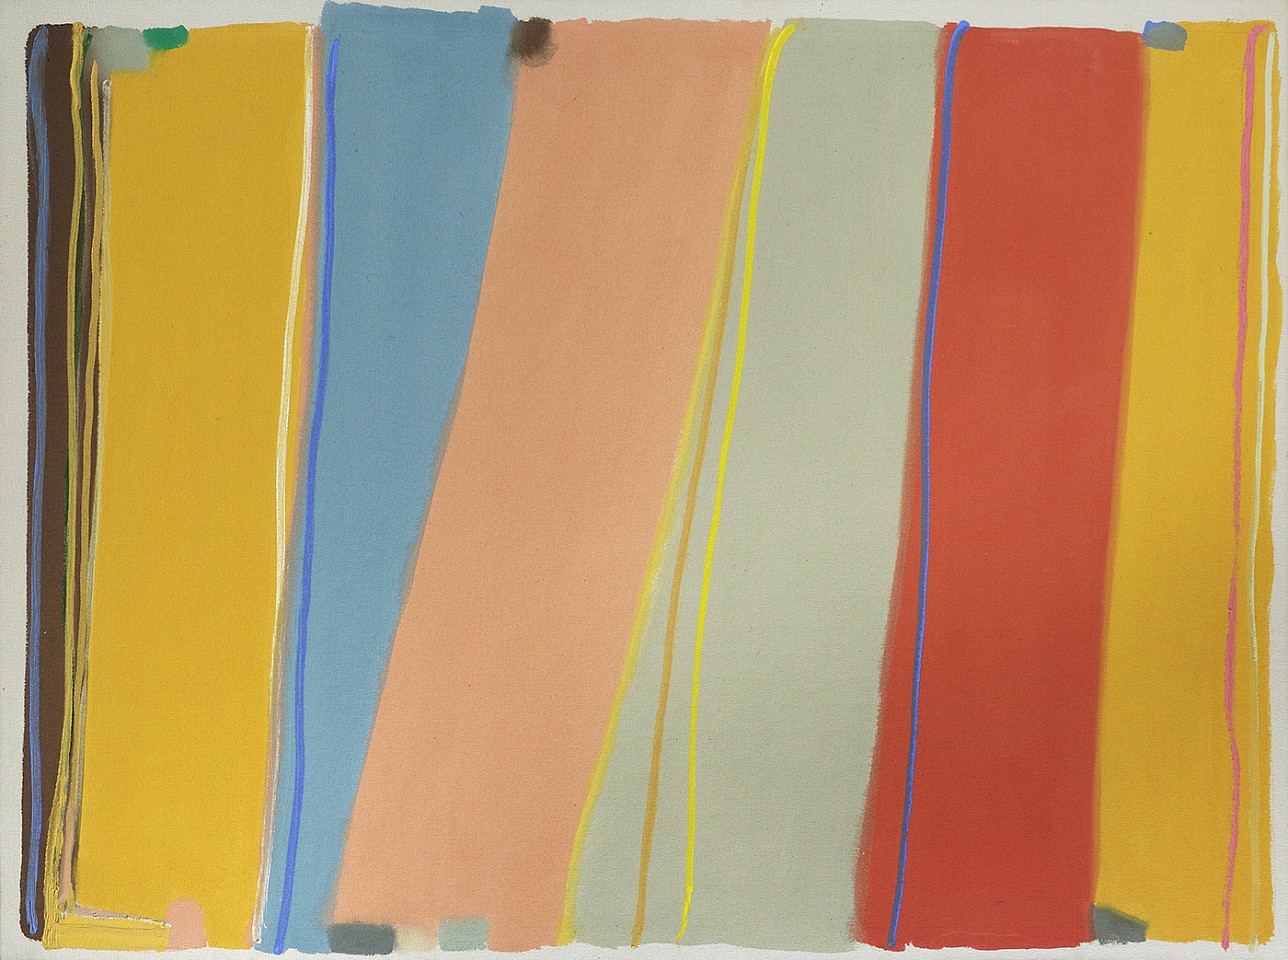 Larry Zox, Hayward, 2003
Acrylic on canvas, 42 1/4 x 57 1/4 in. (107.3 x 145.4 cm)
ZOX-00020